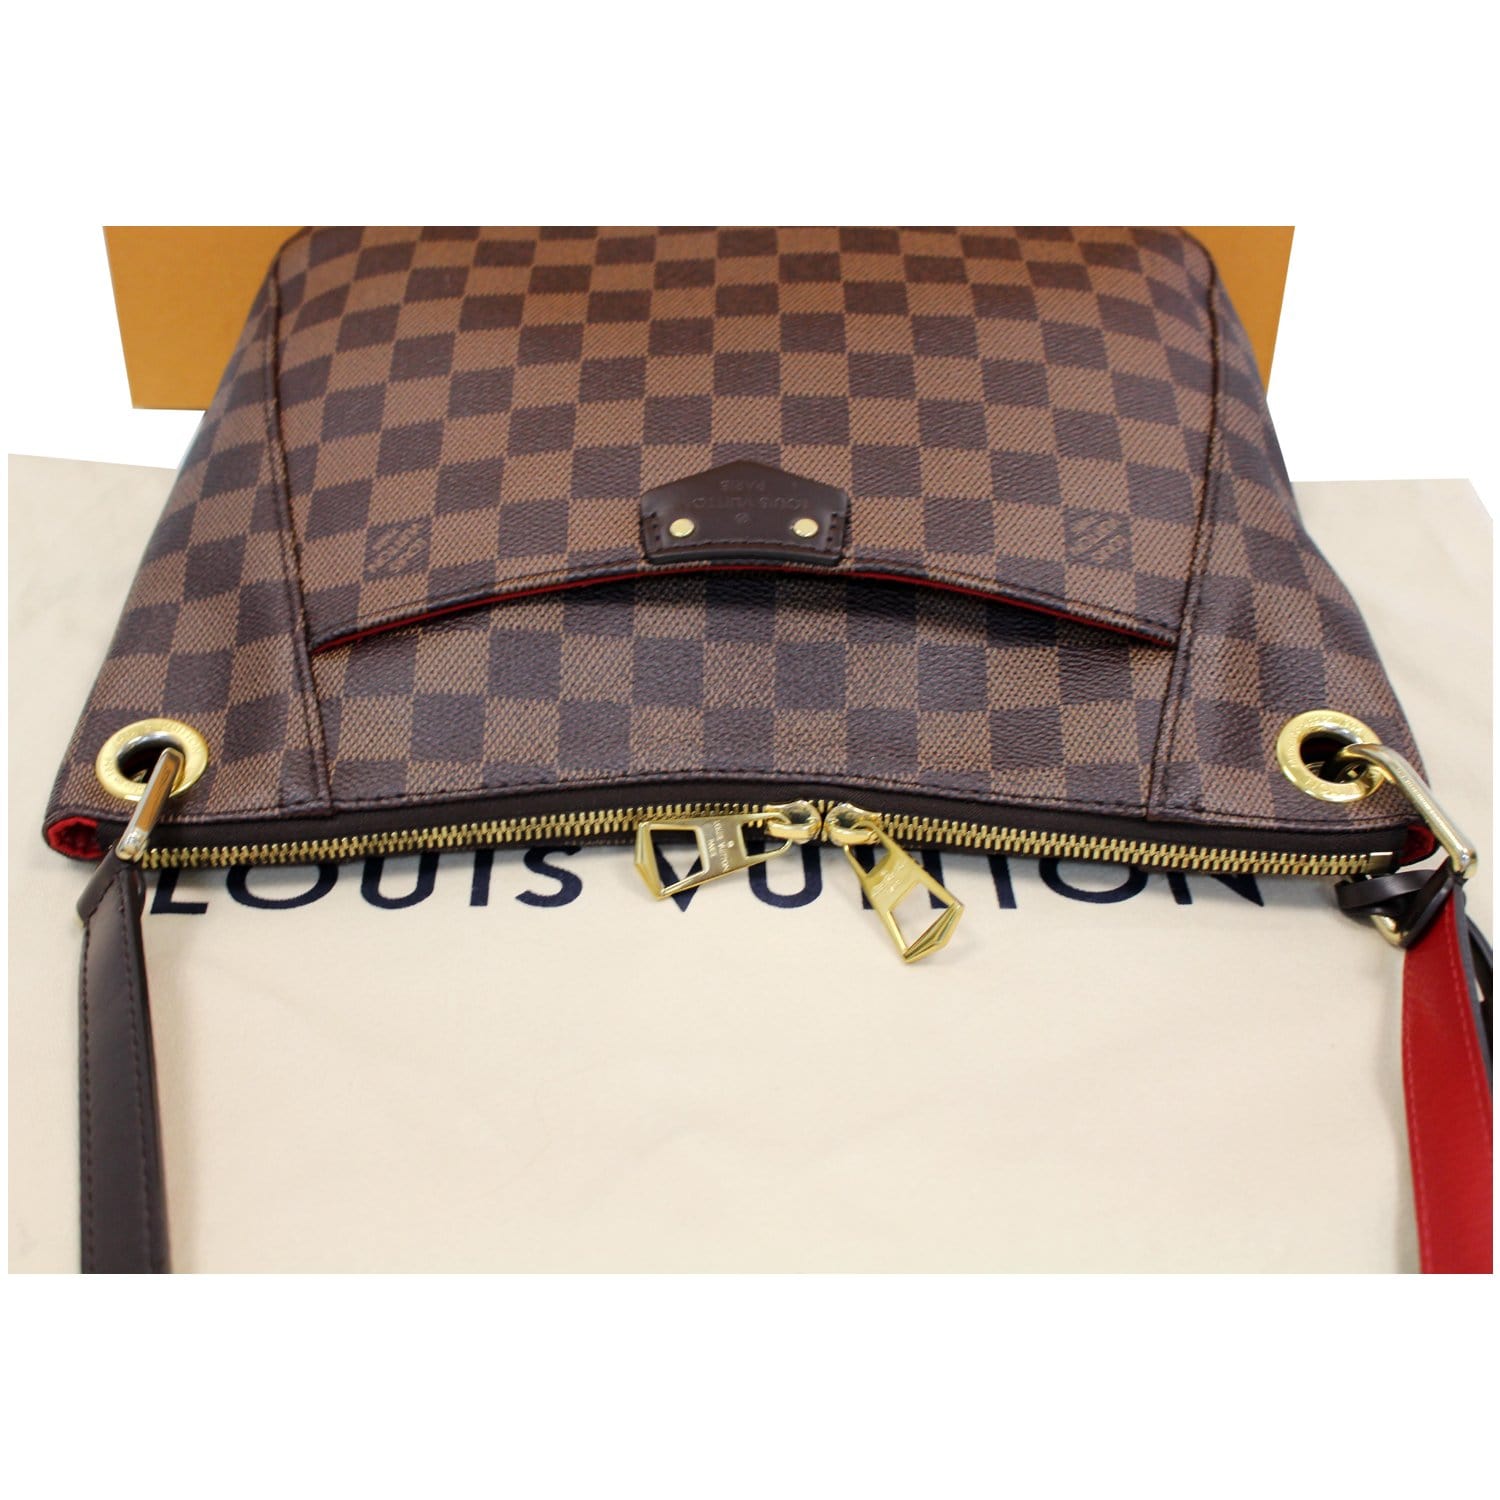 Louis Vuitton South Bank Besace Brown Damier Ebene Canvas Shoulder Bag